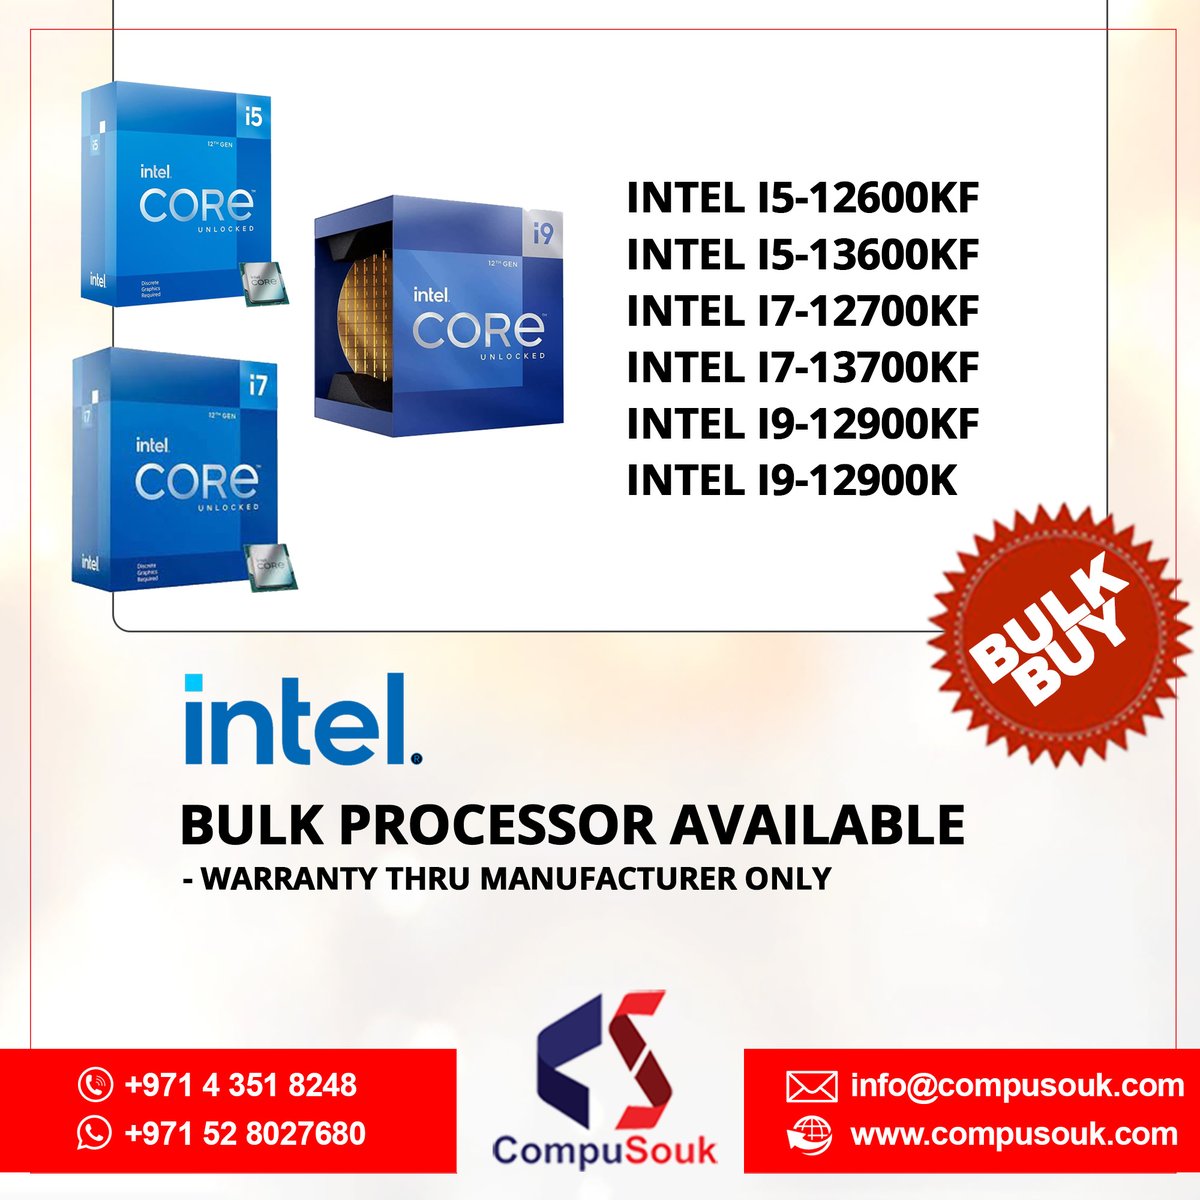 #Intel #Bulk #Processor Available. Enquiry now.

Intel i5-12600K | Intel i5-13600KF | Intel i7-12700KF | Intel i7-13700KF | Intel i9-12900KF | Intel i9-12900K

Visit for more Deals compusouk.com/daily-deals/
#ITReseller #ITBuyers #ConsumerElectronics #Distributor #WholesaleDeal